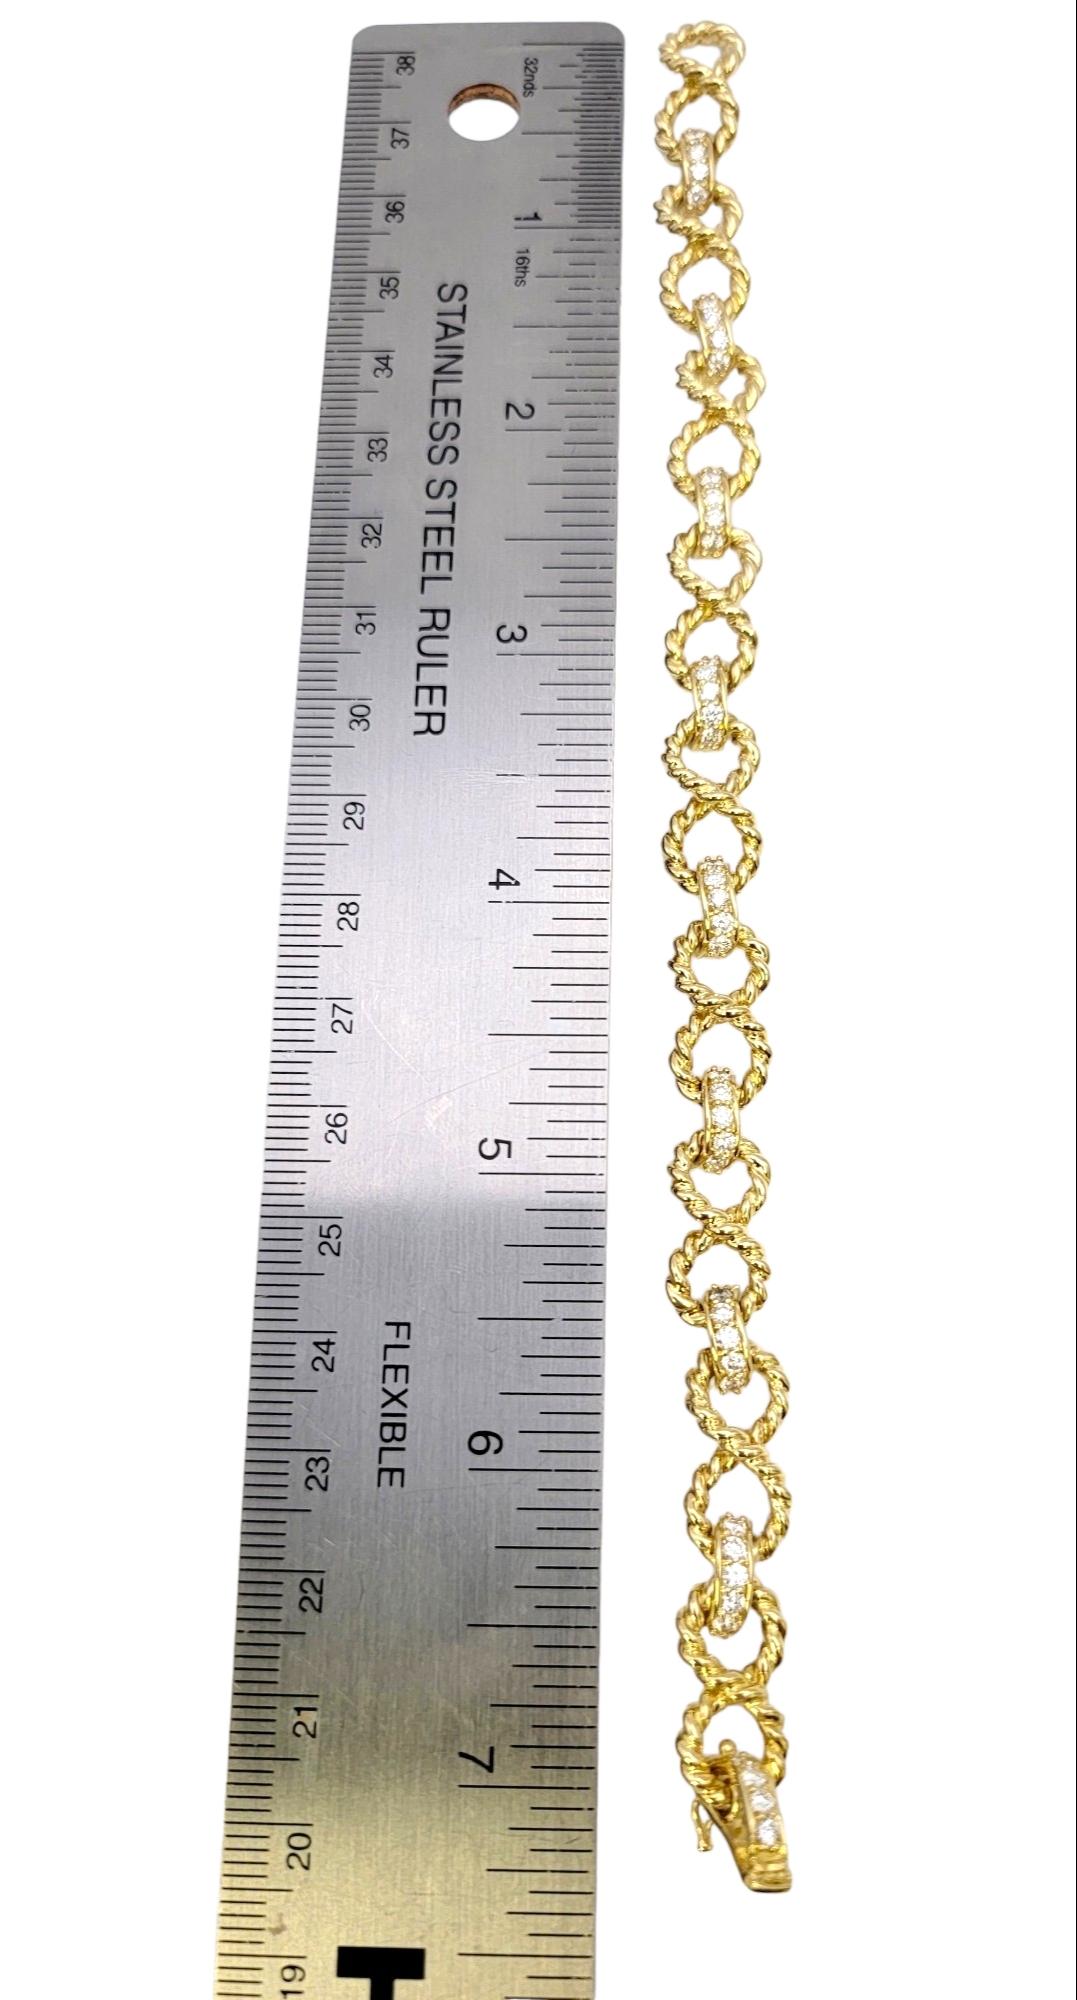 Vintage Tiffany & Co. Infinity Link Bracelet with Diamonds 18 Karat Yellow Gold 9